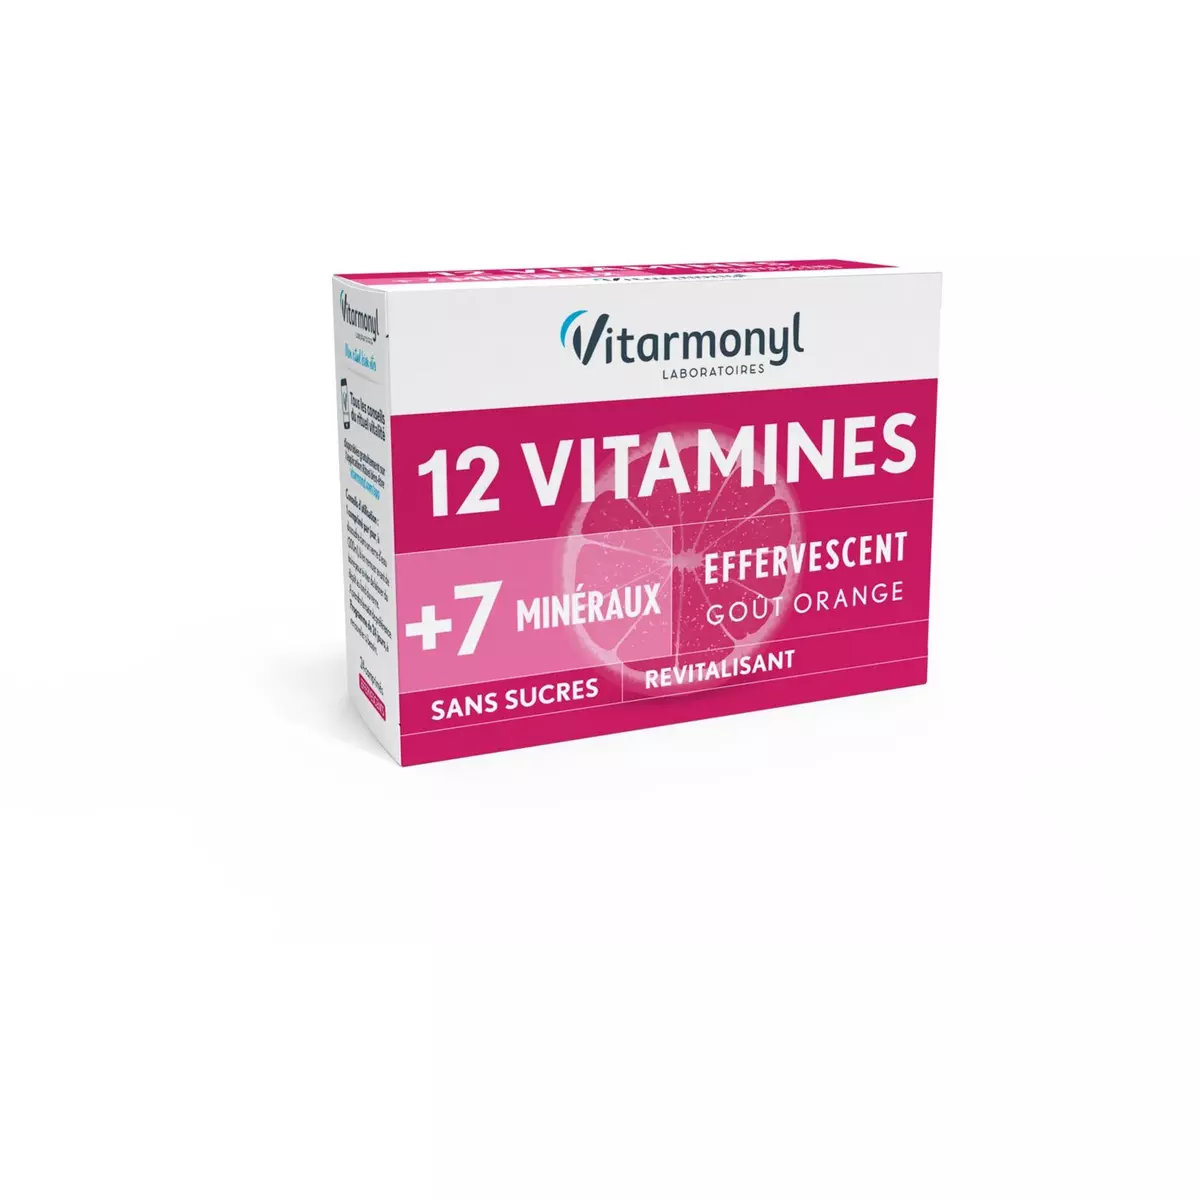 VITARMONYL Comprimés effervescents 12 vitamines 7 minéraux sans sucre 67g